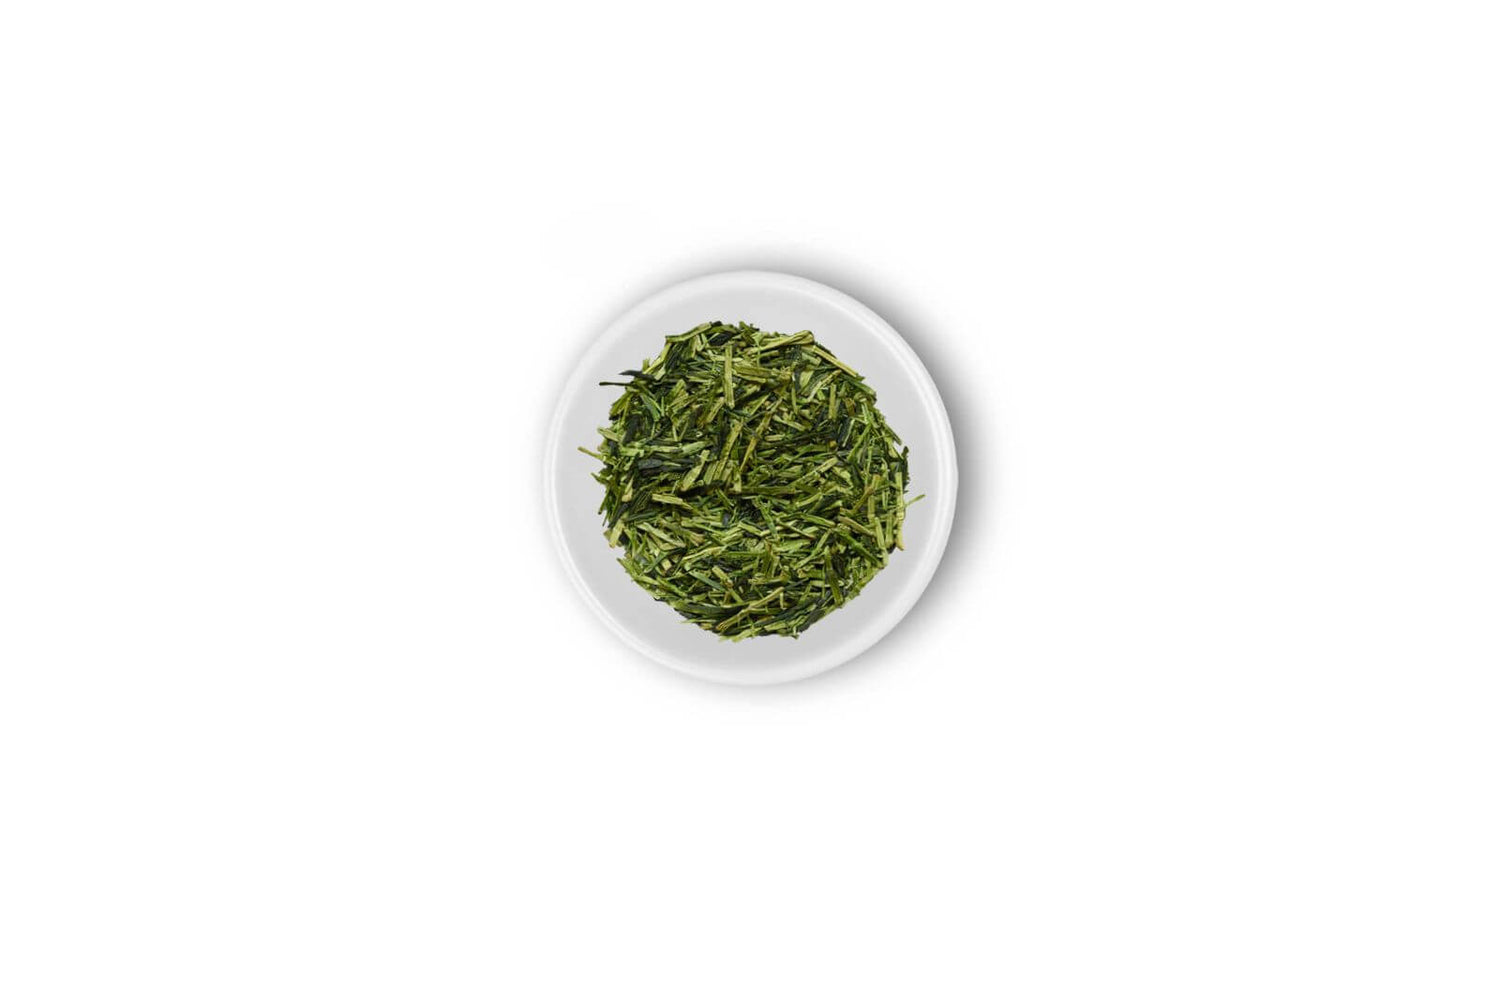 kukicha tea leafs in a cup